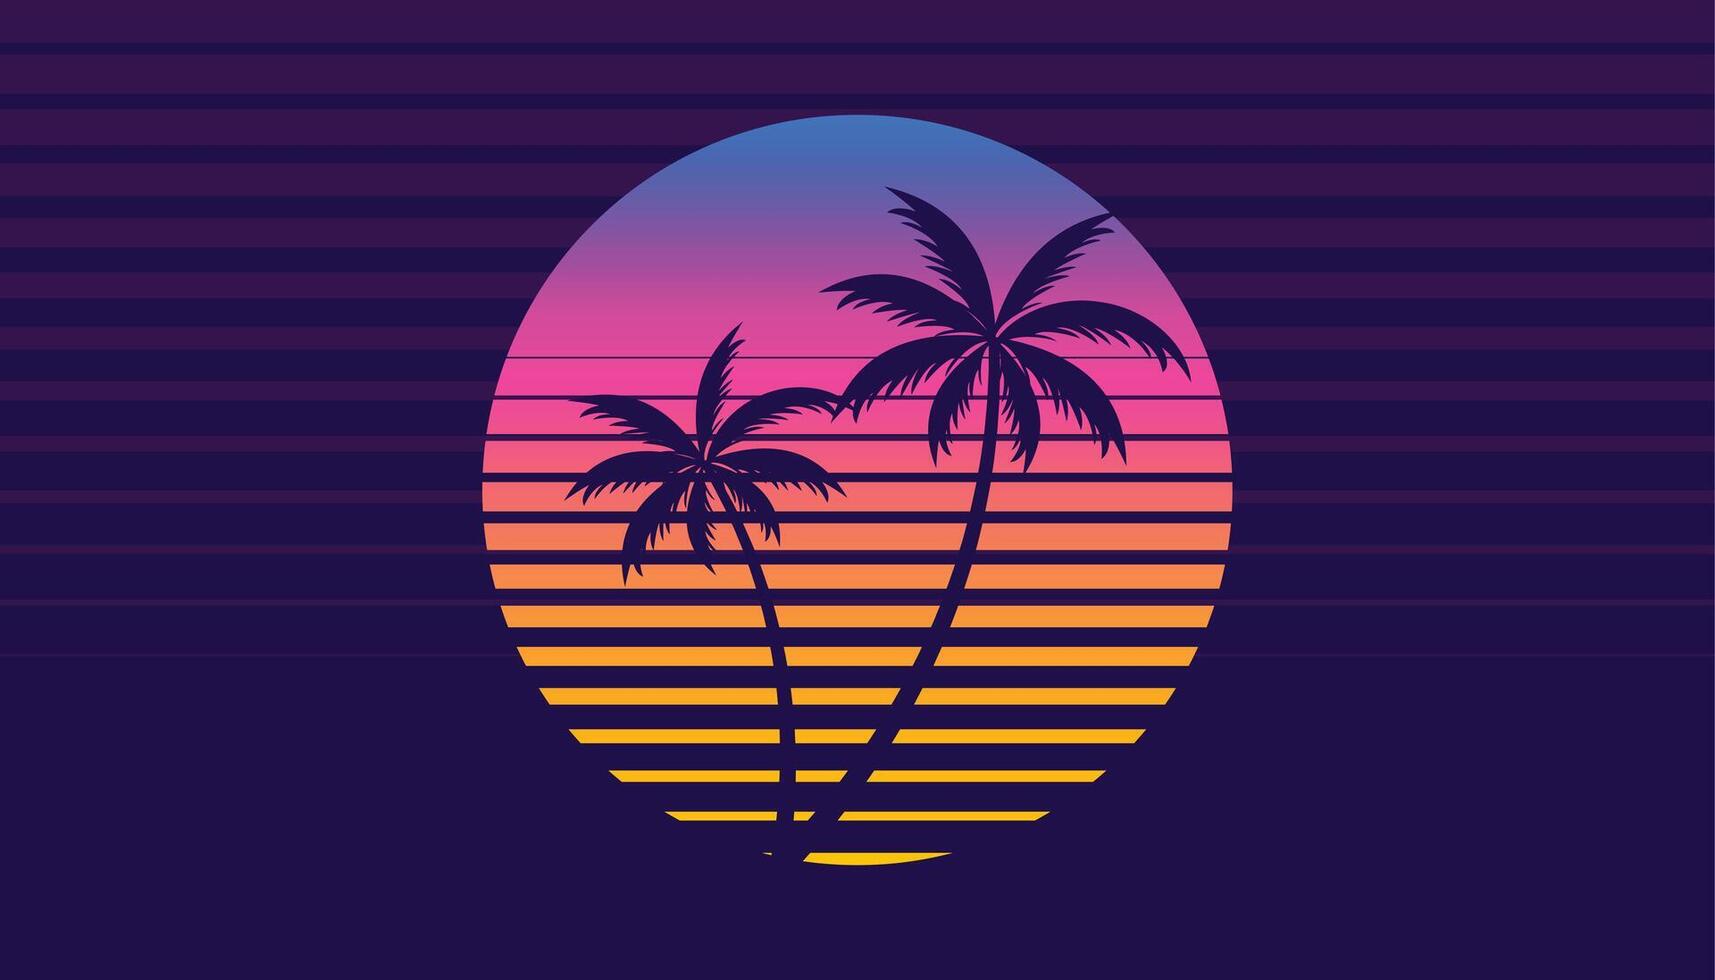 klassisk retro 80s stil tropisk solnedgång med handflatan träd vektor